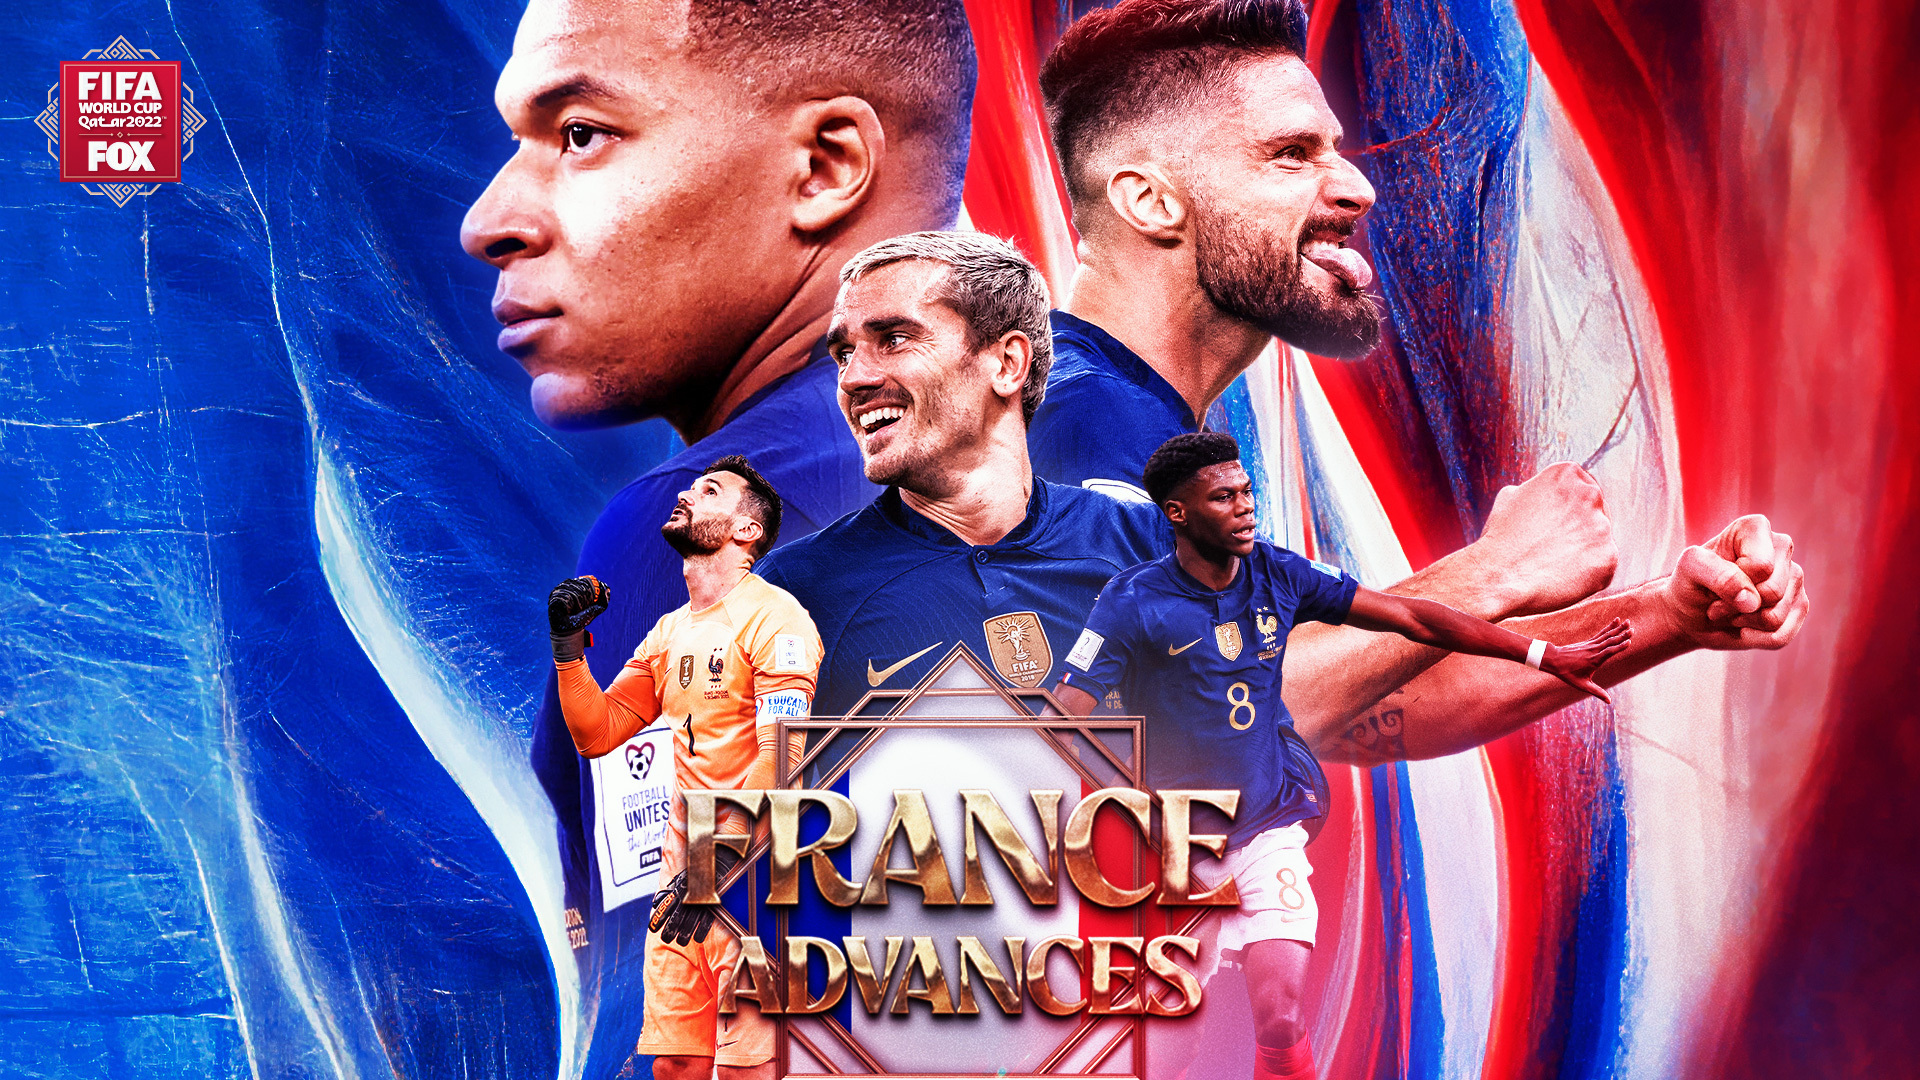 England vs France December 10, 2022 FOX Sports